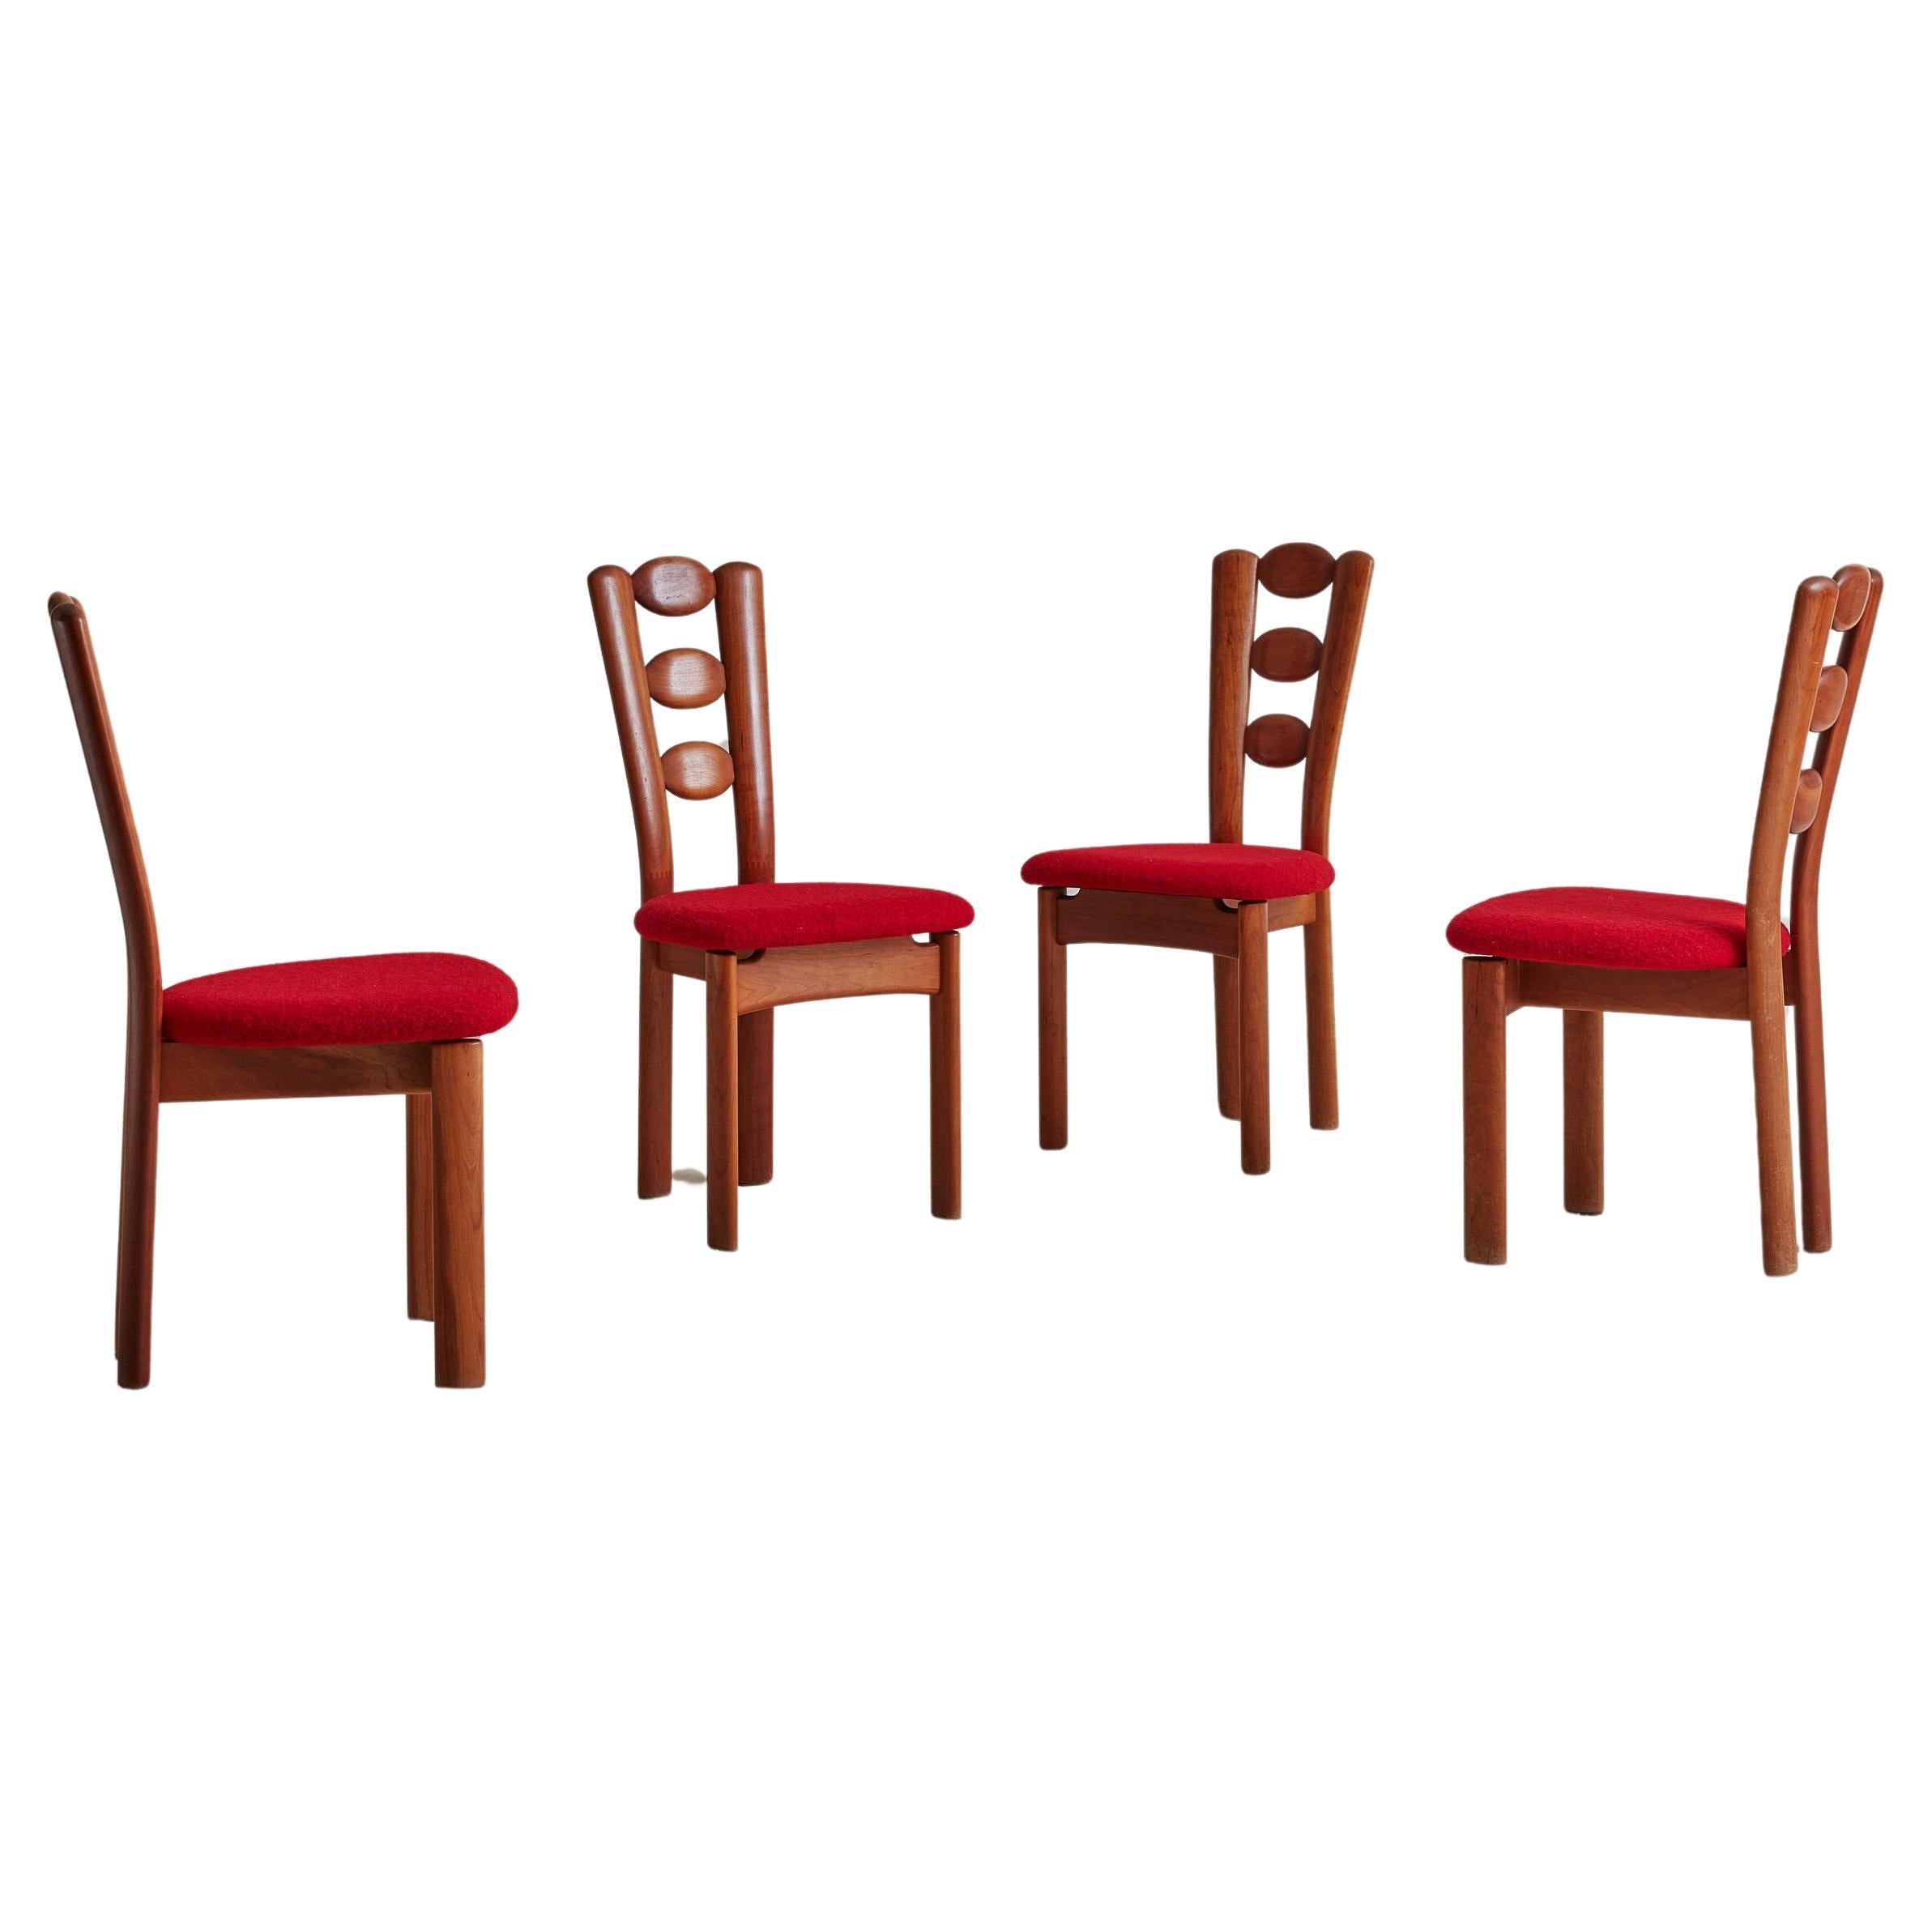 Set of 4 Teak Dining Chairs, Denmark 1960s